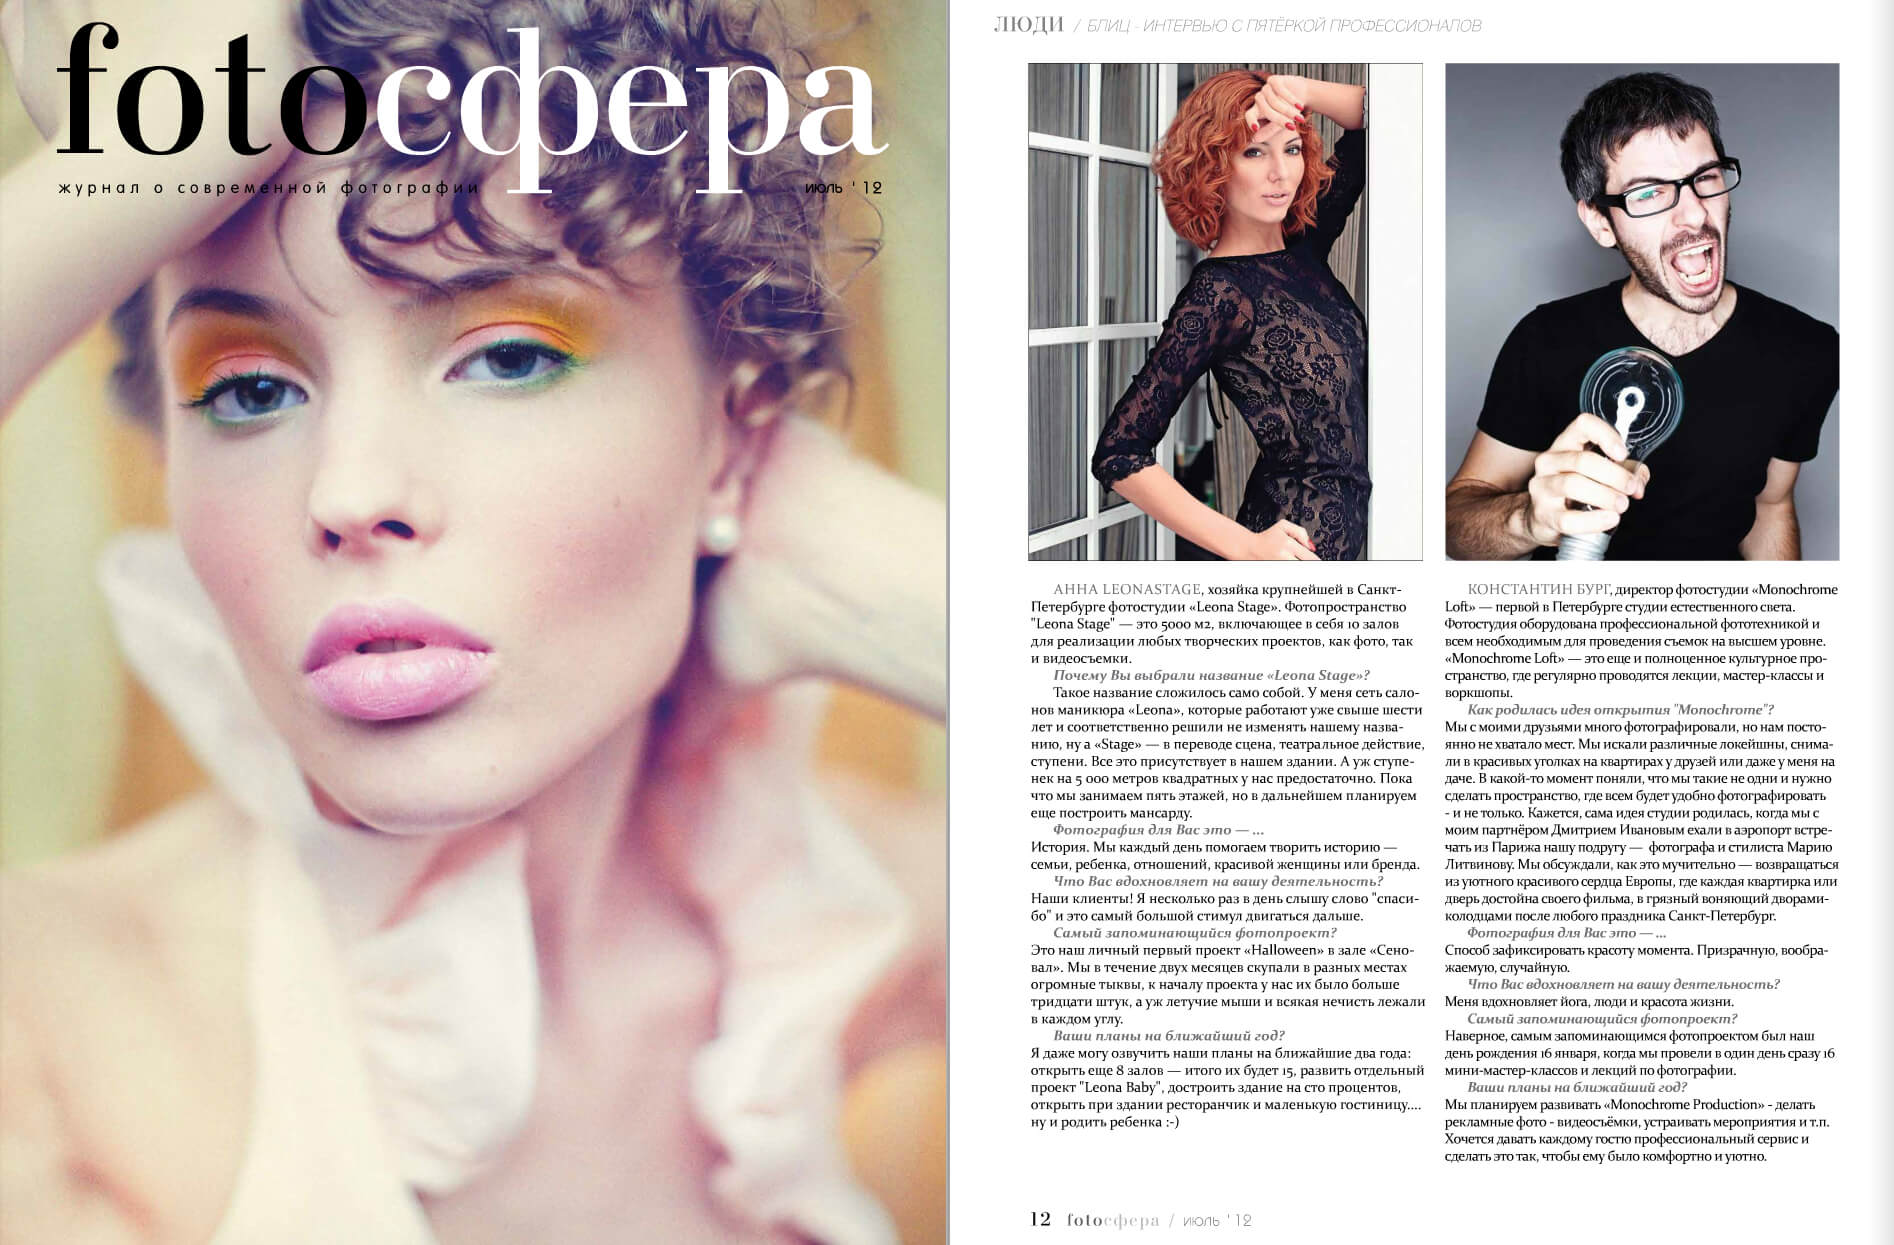 Konstantin in “Fotosphere” magazine